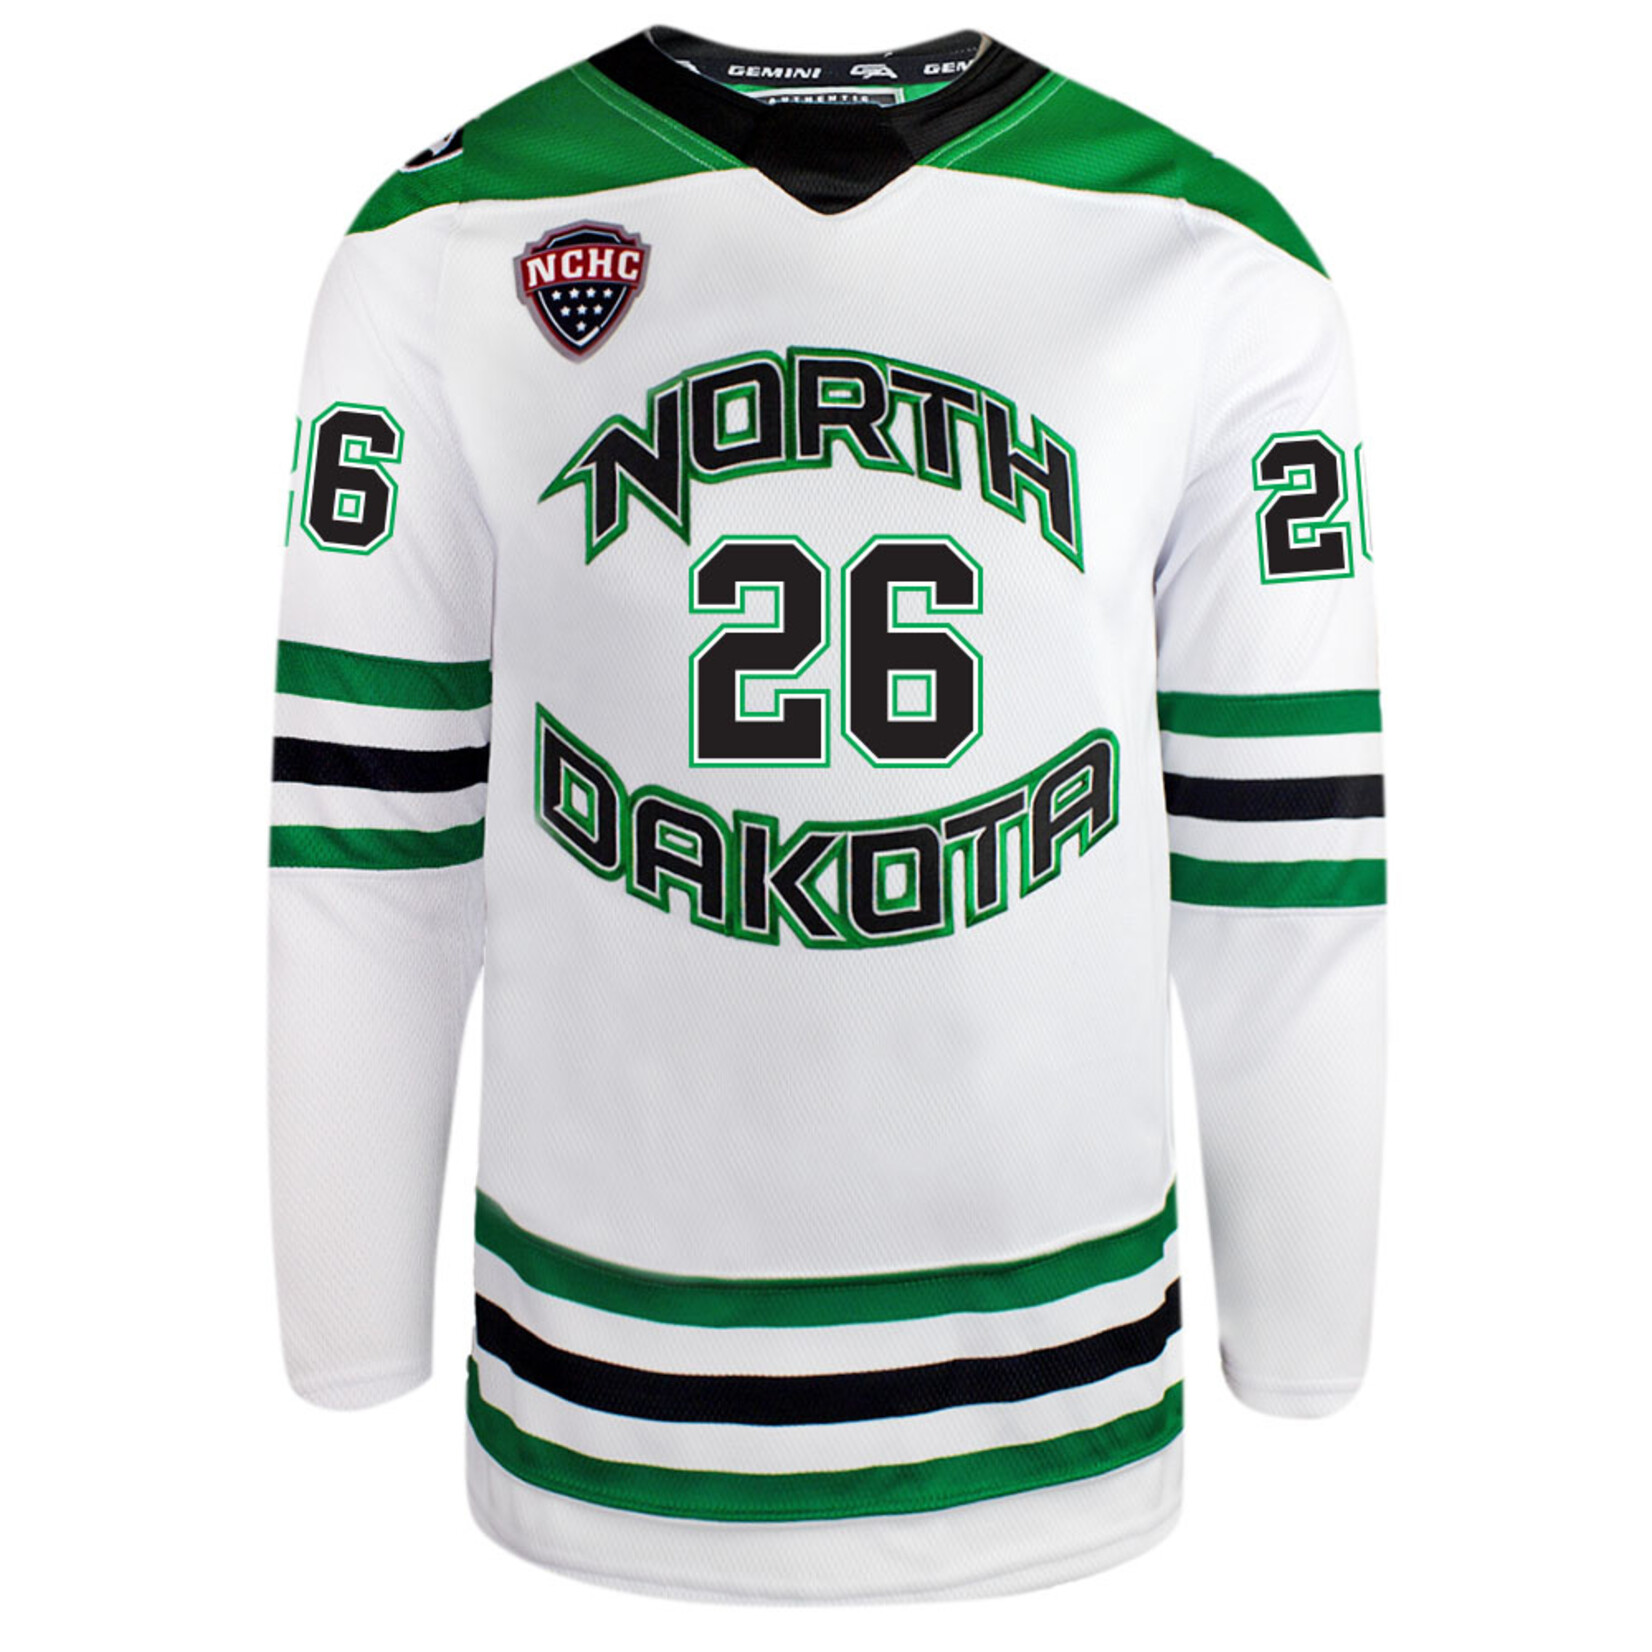 #26 Dylan James North Dakota Hockey SP Jersey